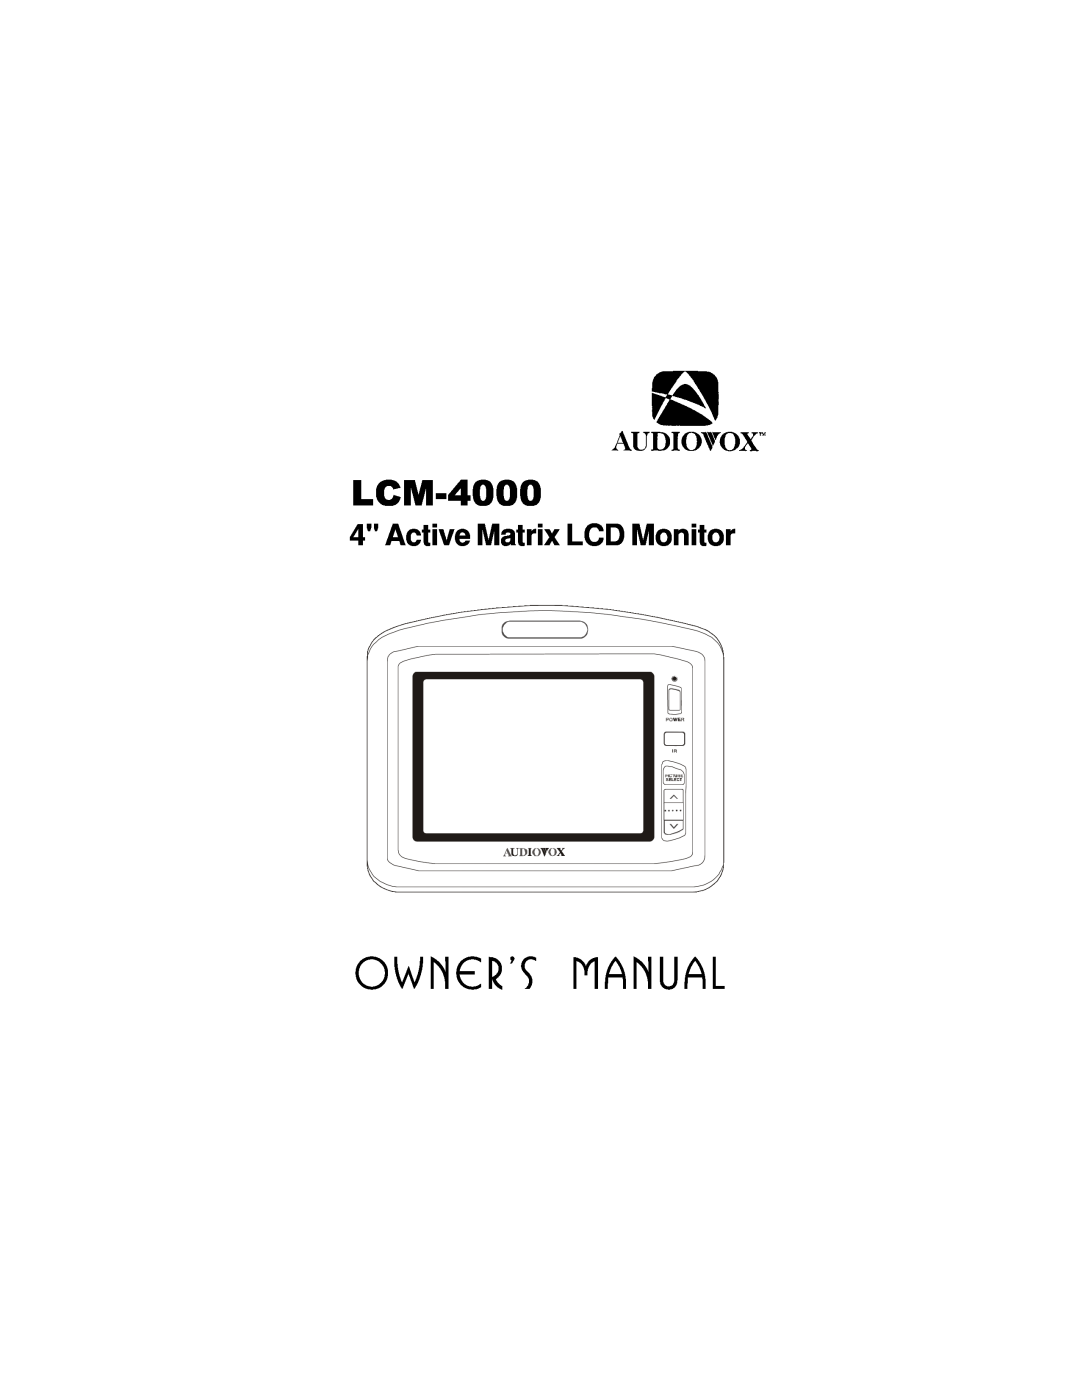 Audiovox LCM4000 manual Owner’s Manual, LCM-4000, Active Matrix LCD Monitor 